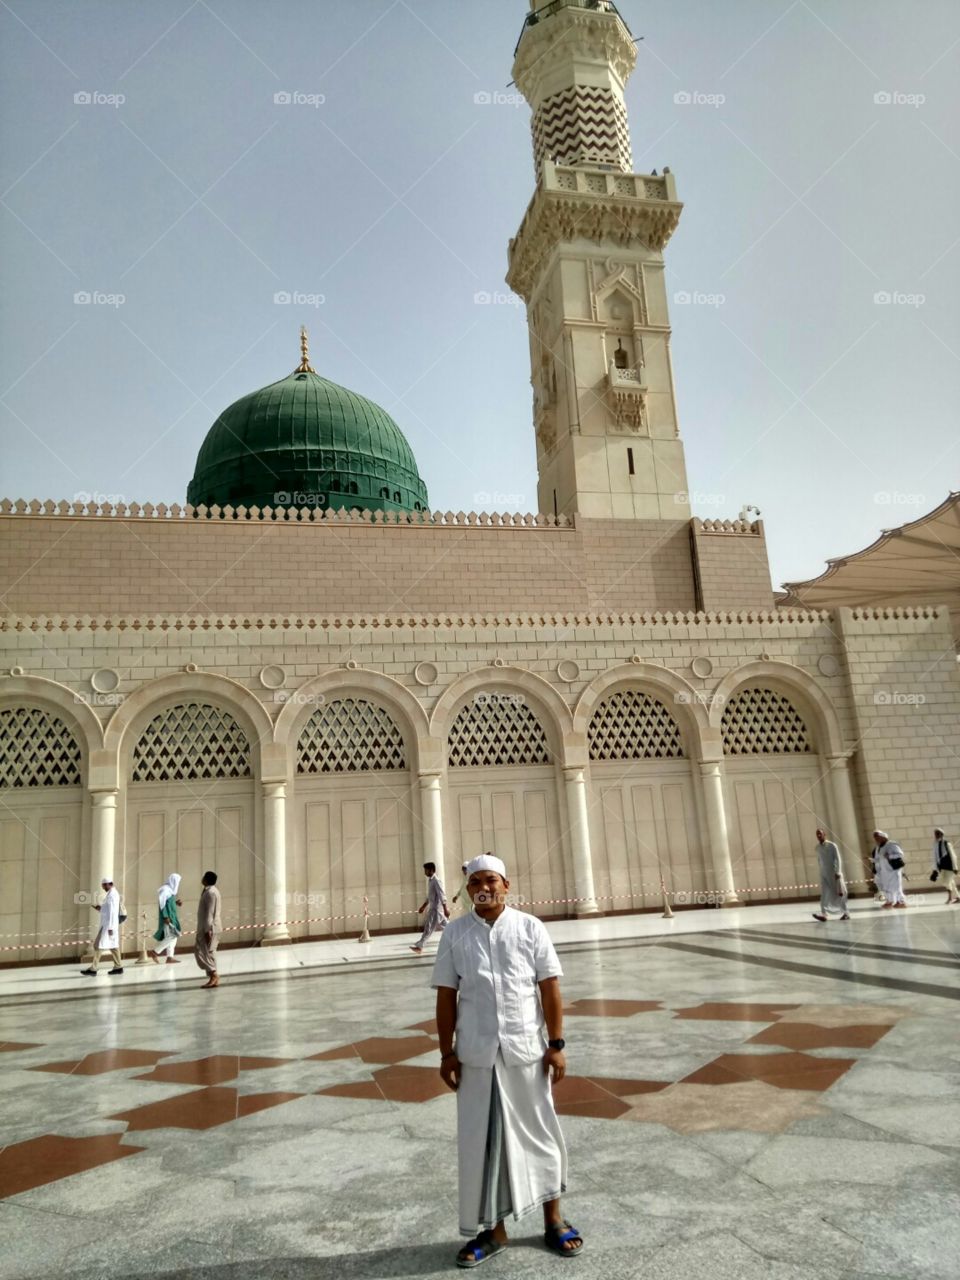 Minaret, Architecture, Religion, Travel, Muslim